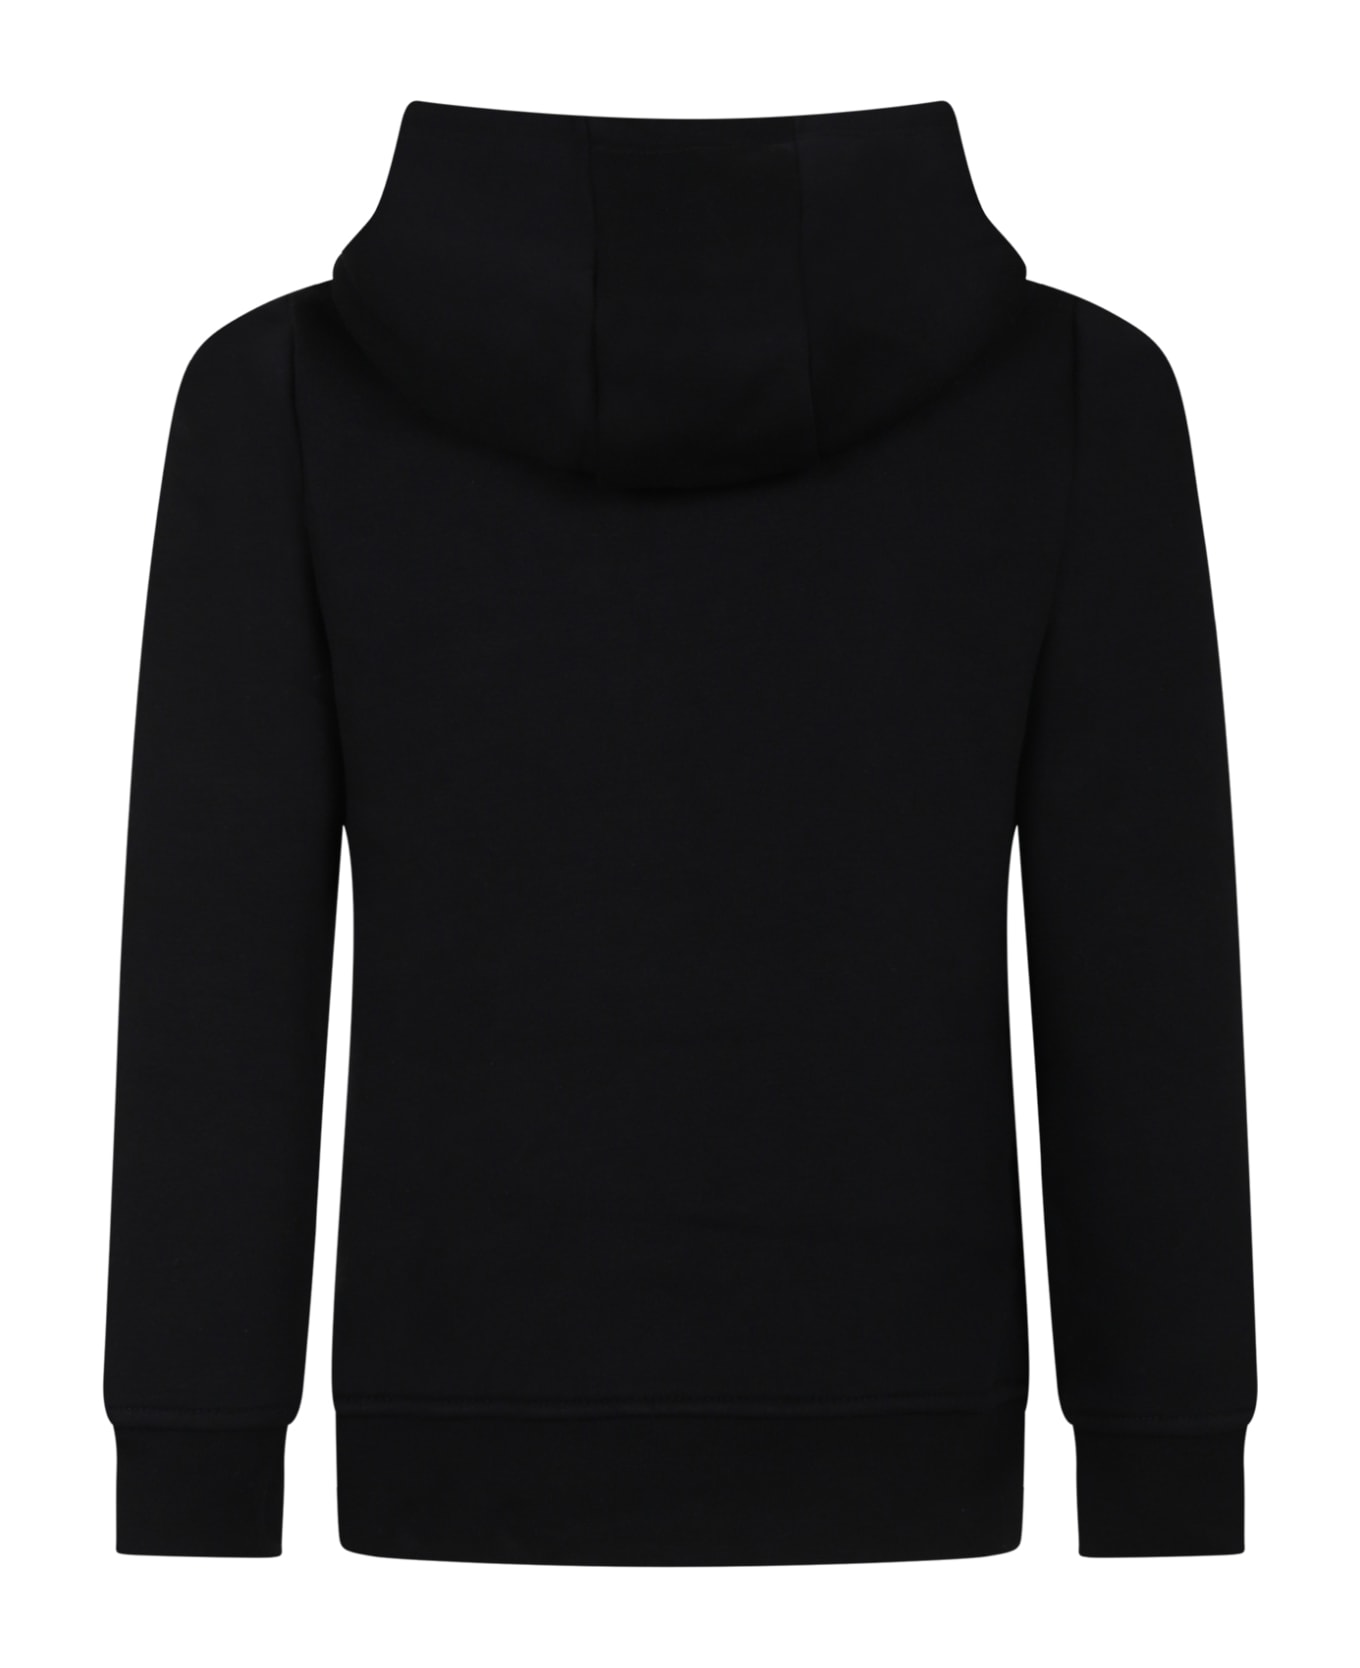 Hugo Boss Black Sweatshirt For Boy With Logo - Black